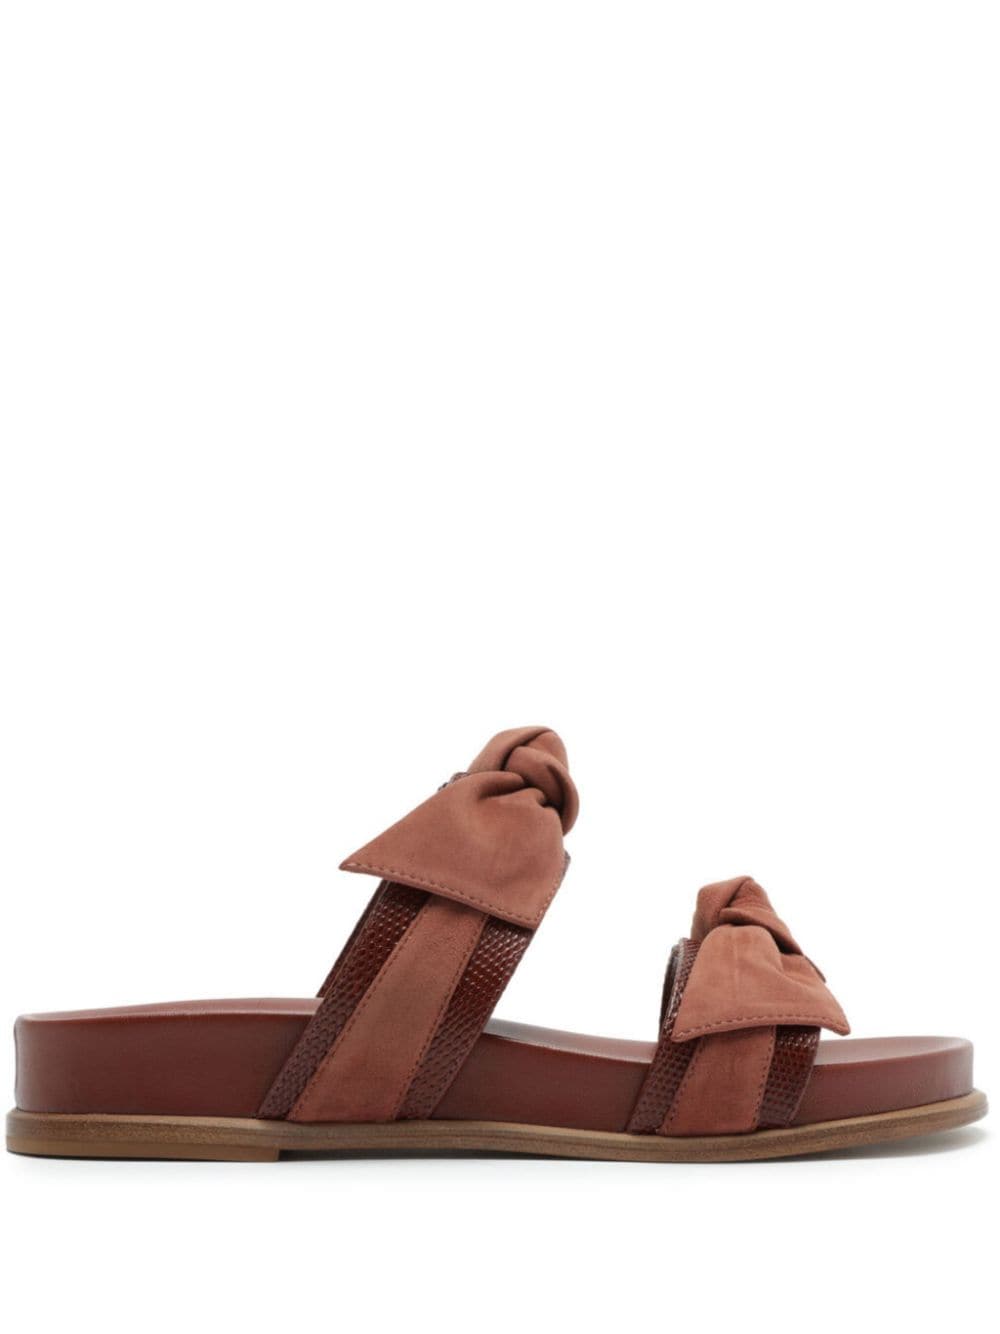 Alexandre Birman Maxi Clarita Sport leather sandals - Brown von Alexandre Birman